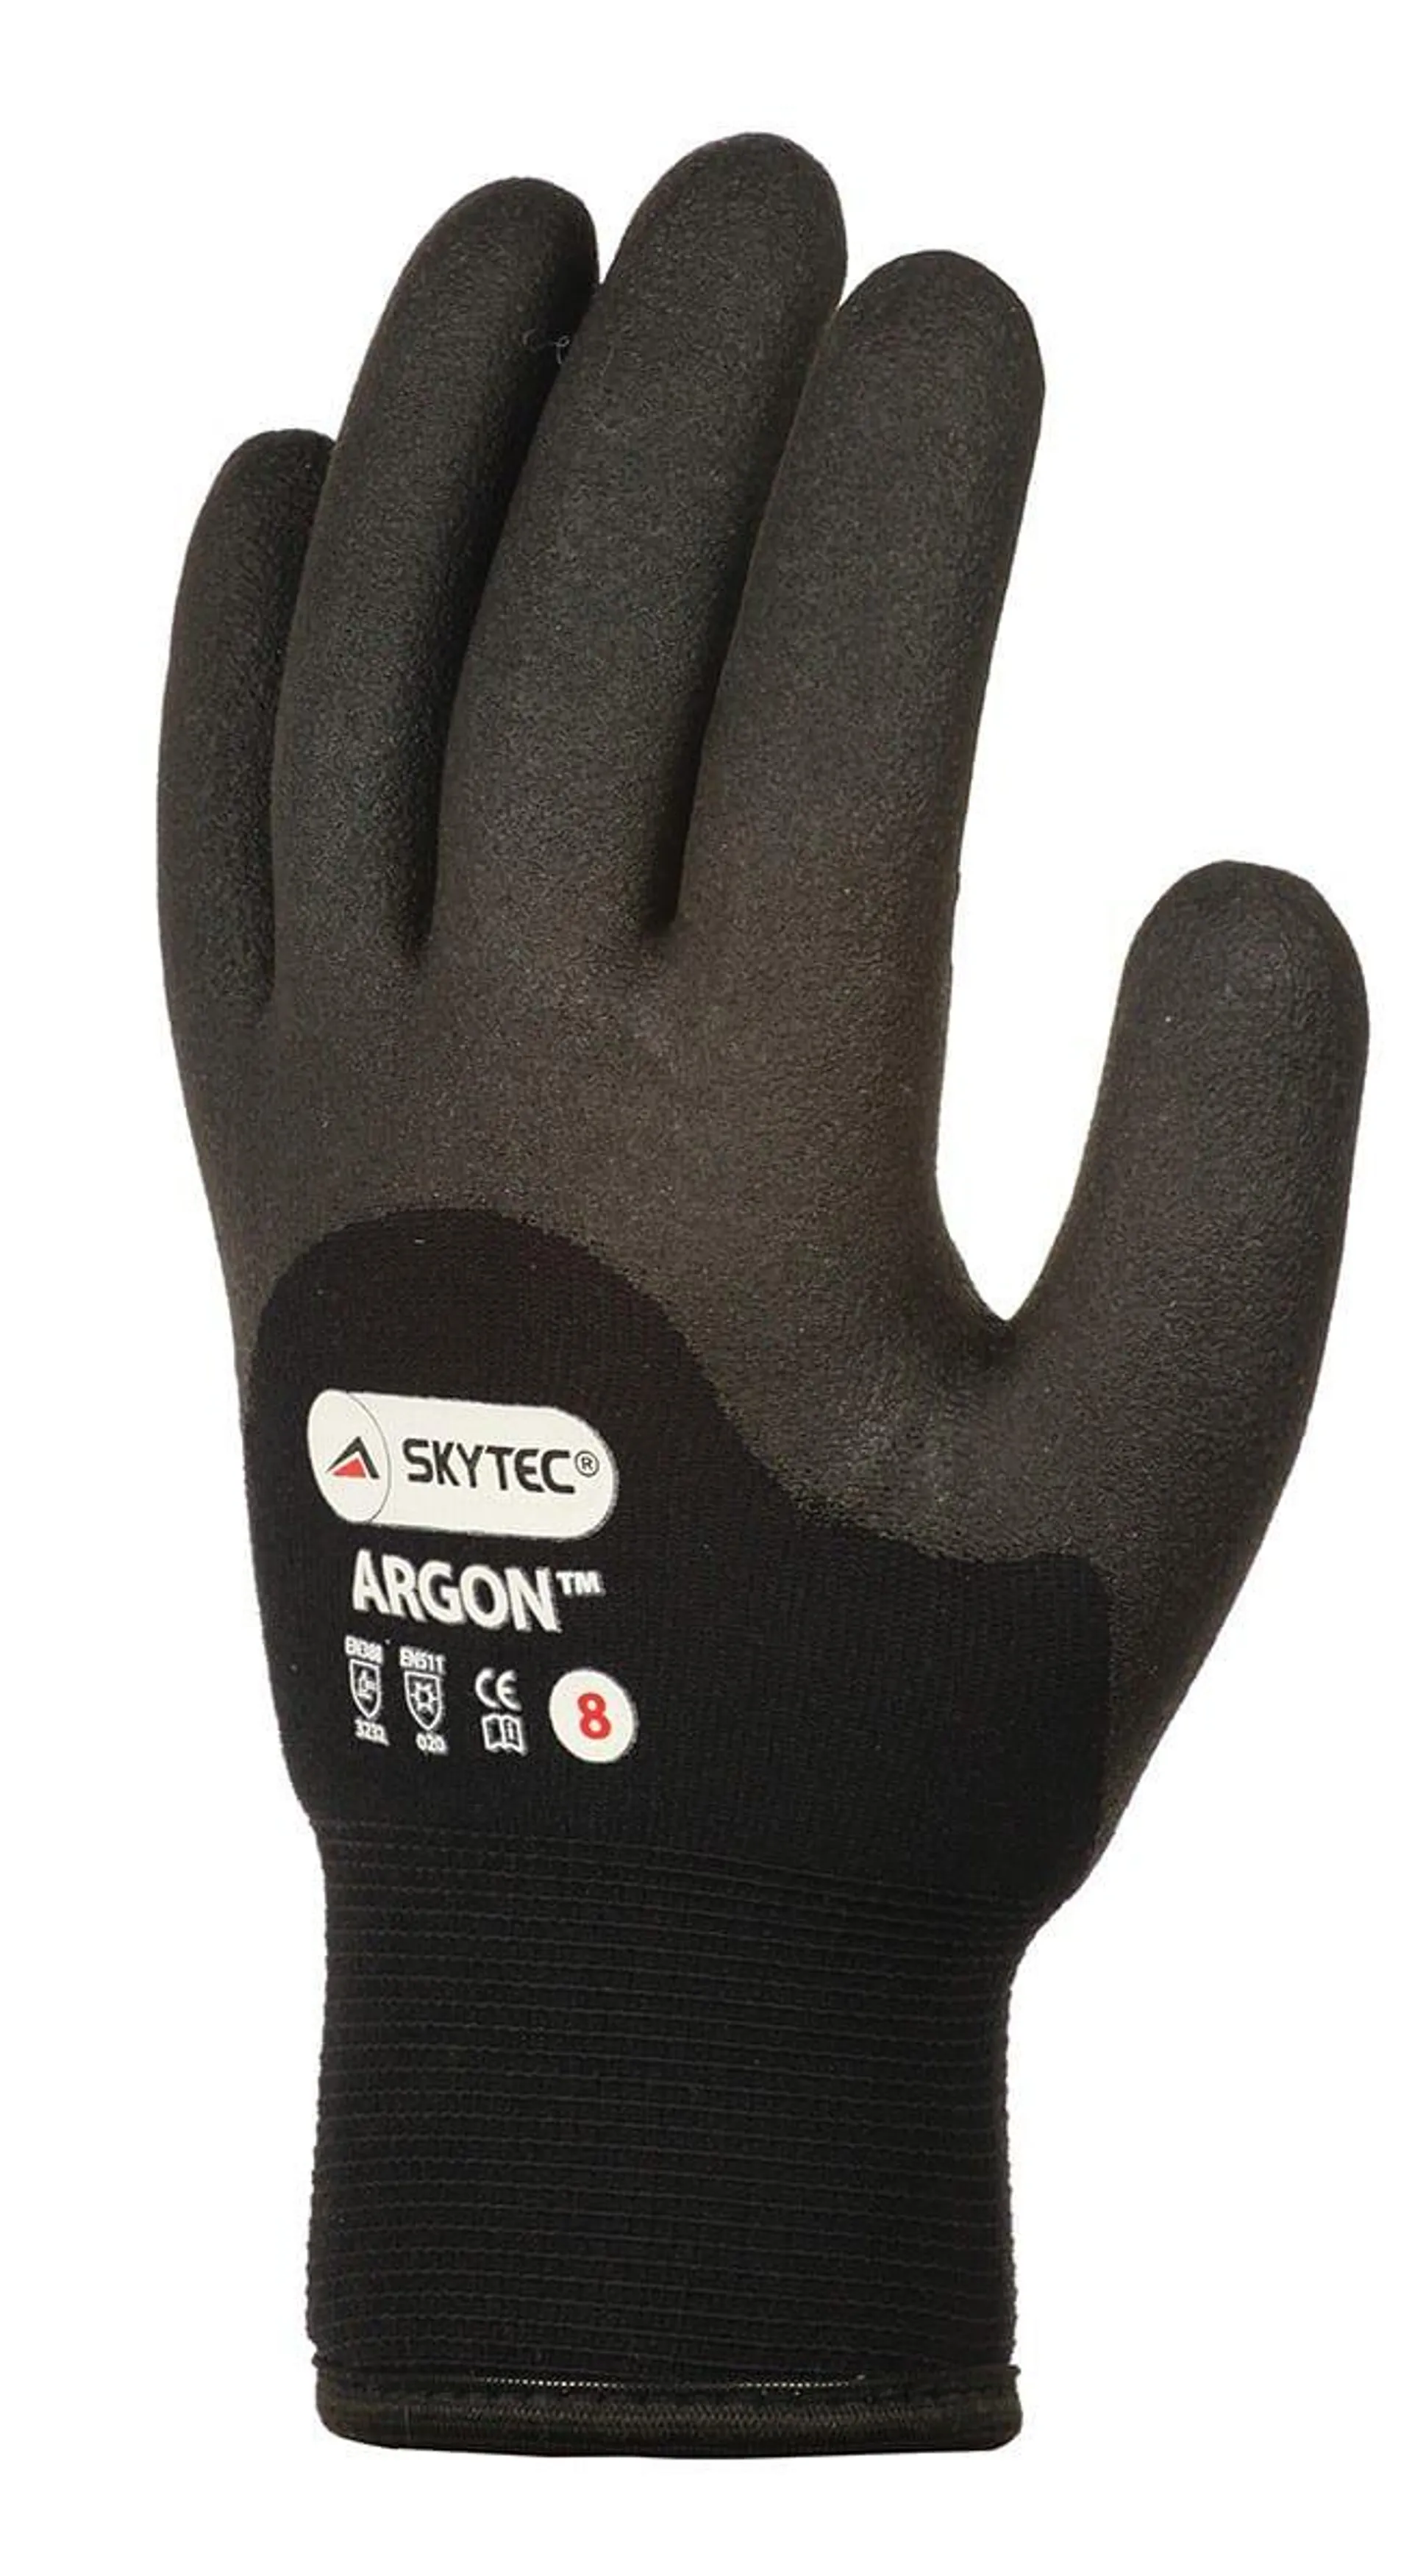 Argon Thermal Glove